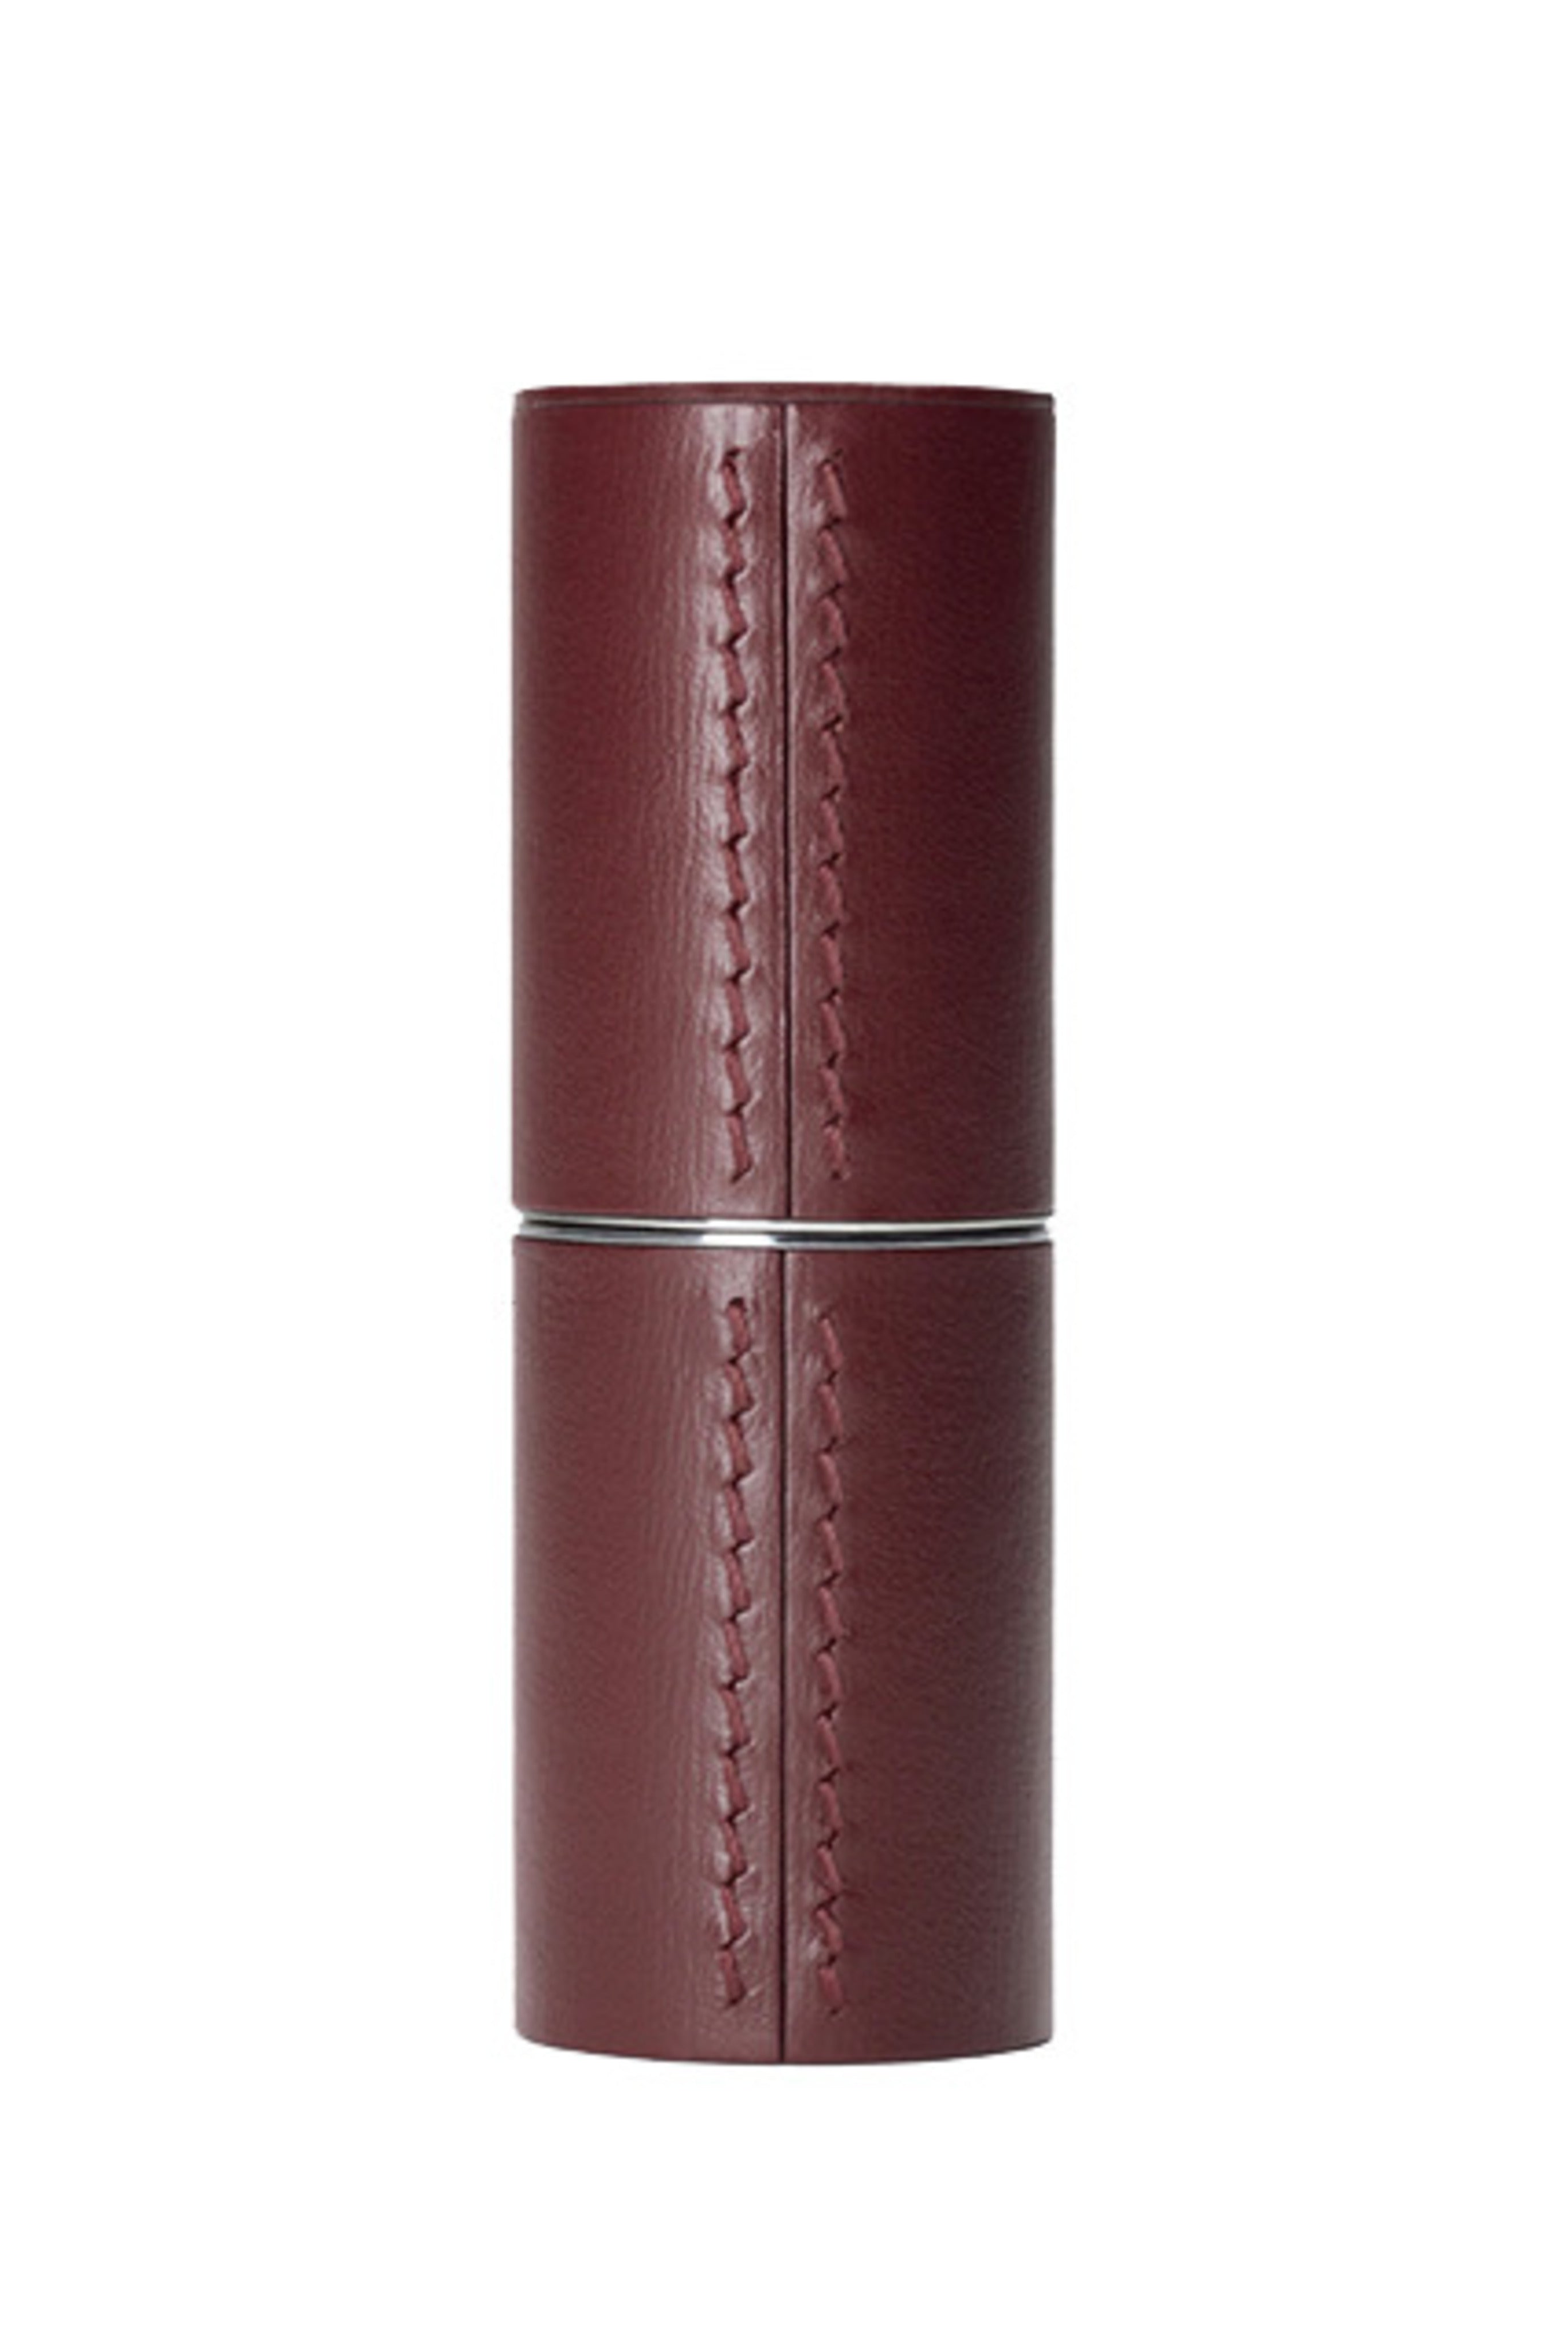 LA BOUCHE ROUGE Leather Lipstick Case - Chocolate